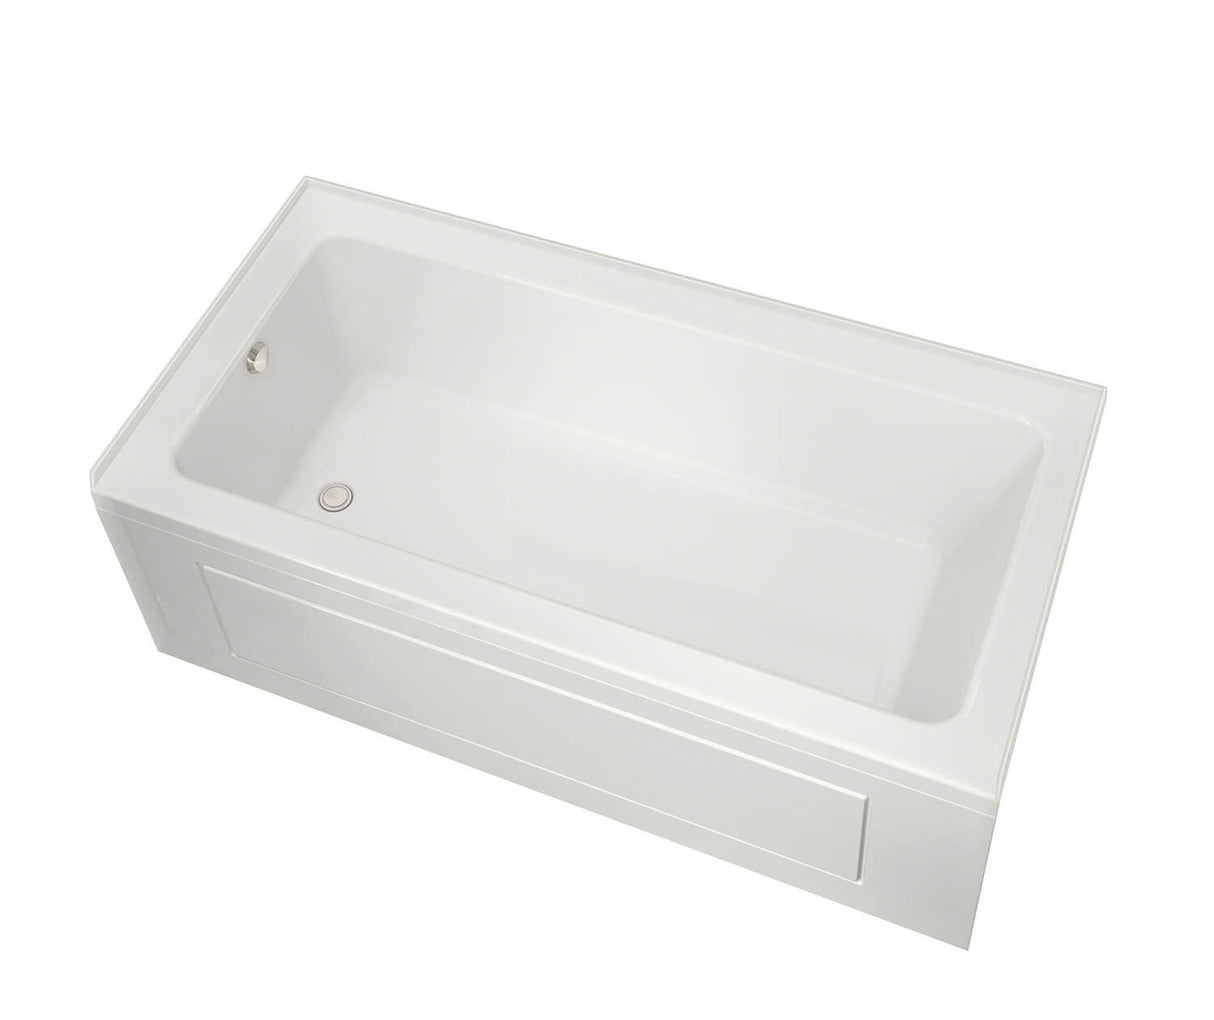 MAAX 106201-000-001-112 Pose 6032 IF Acrylic Alcove Right-Hand Drain Bathtub in White